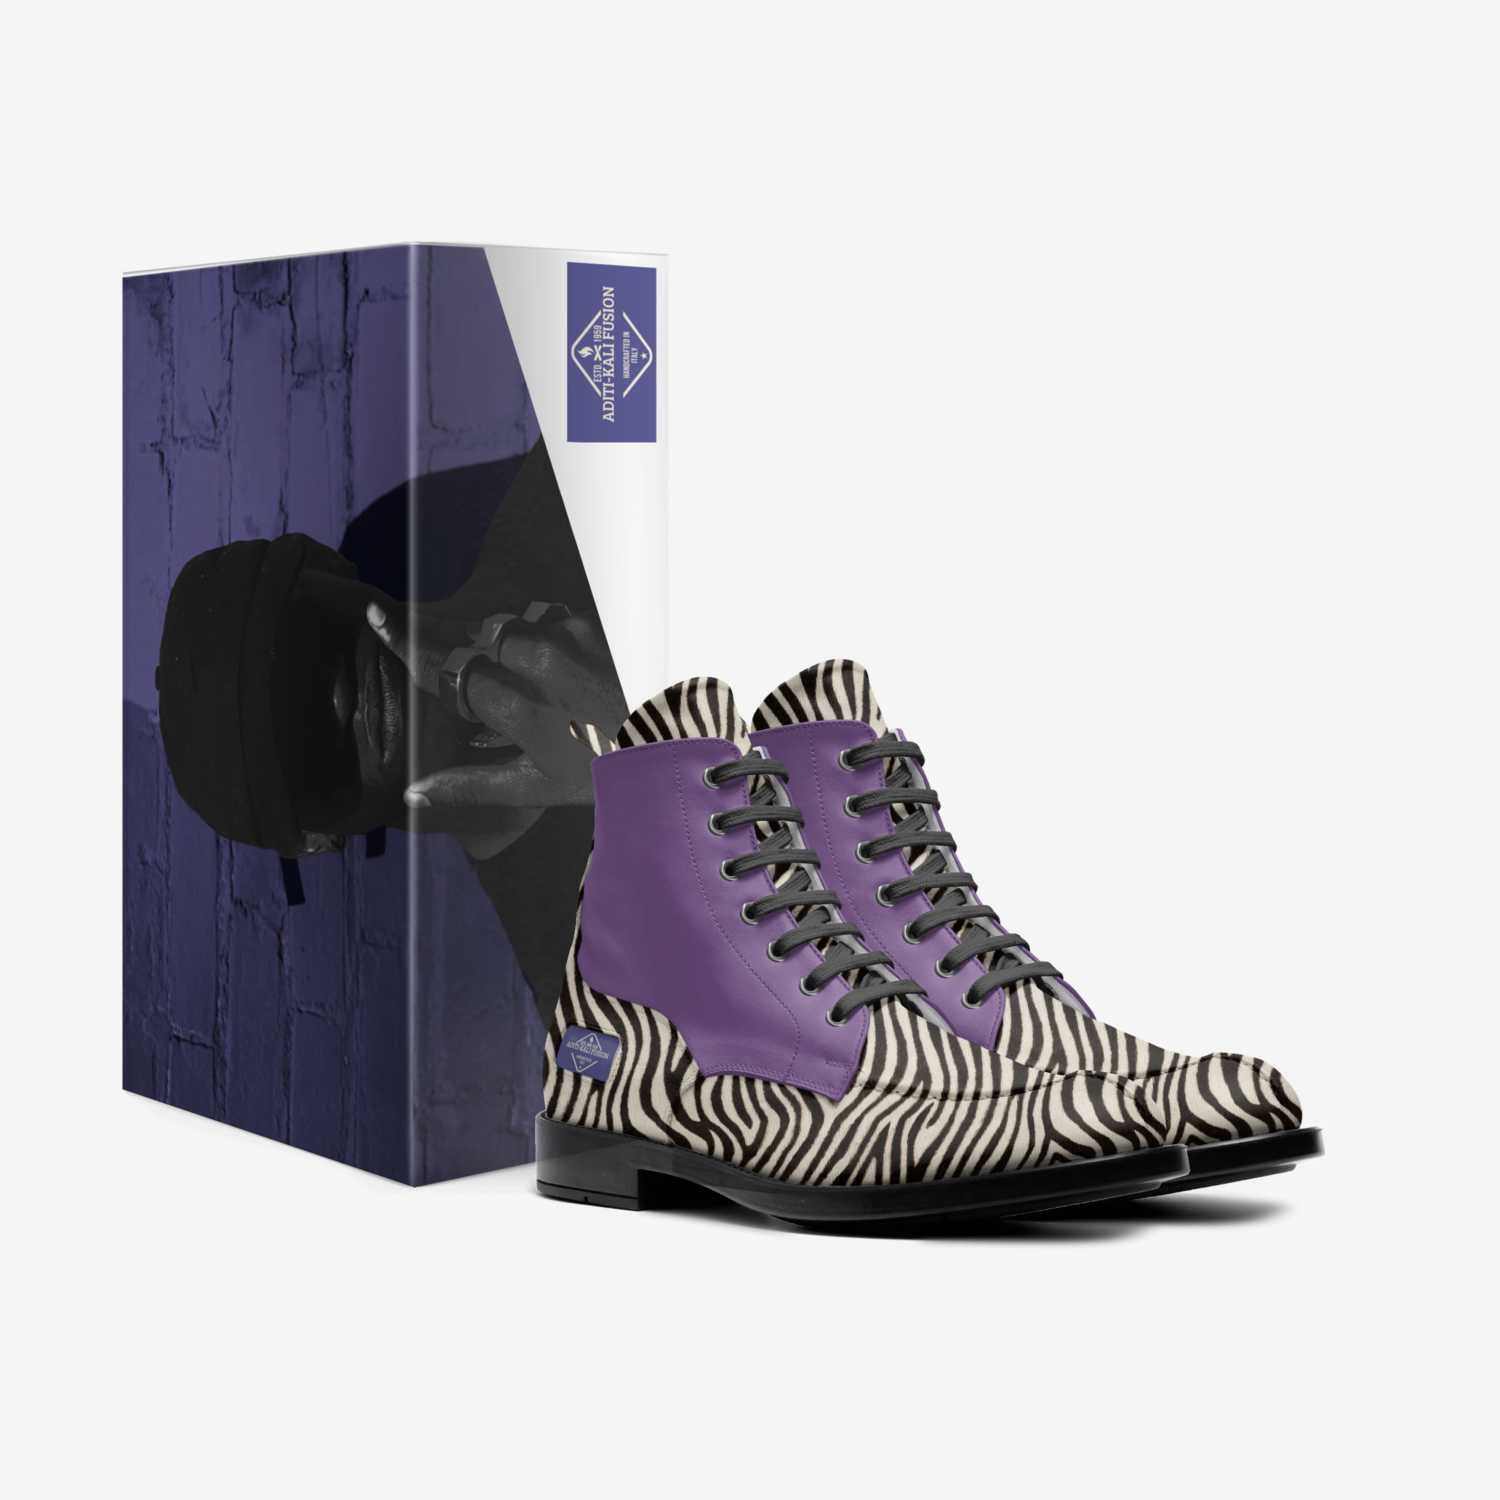 ADITI-KALI FUSION custom made in Italy shoes by Aditi-kali Of Wonkey Donkey Bazaar | Box view